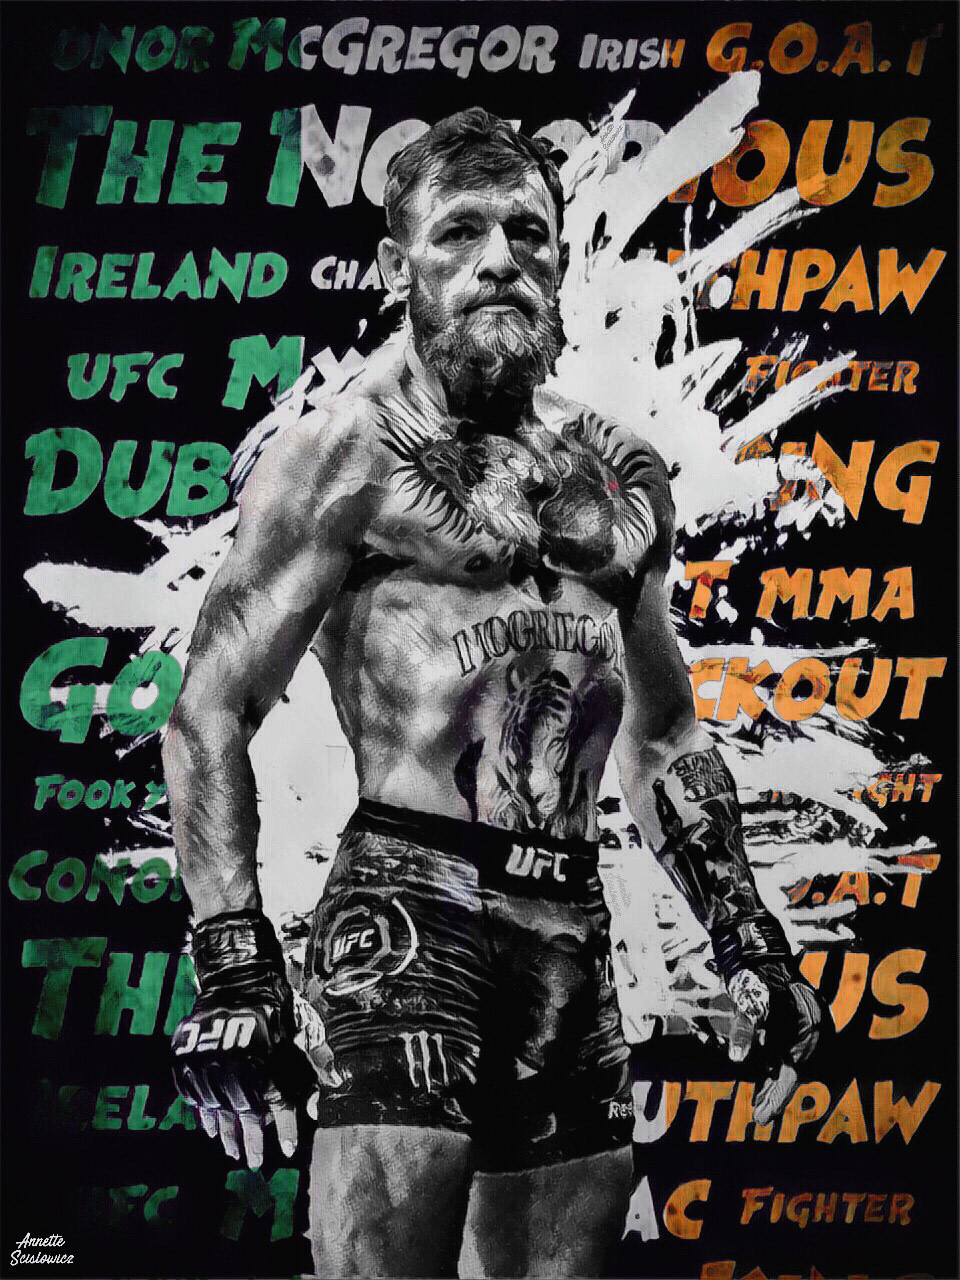 conor McGregor conormcgregor UFC Fighter champ champchamp MMA sports irish Ireland proper12 propertwelve thenotorious notorious Mystic mac mysticmac punch uppercut kick roundhouse